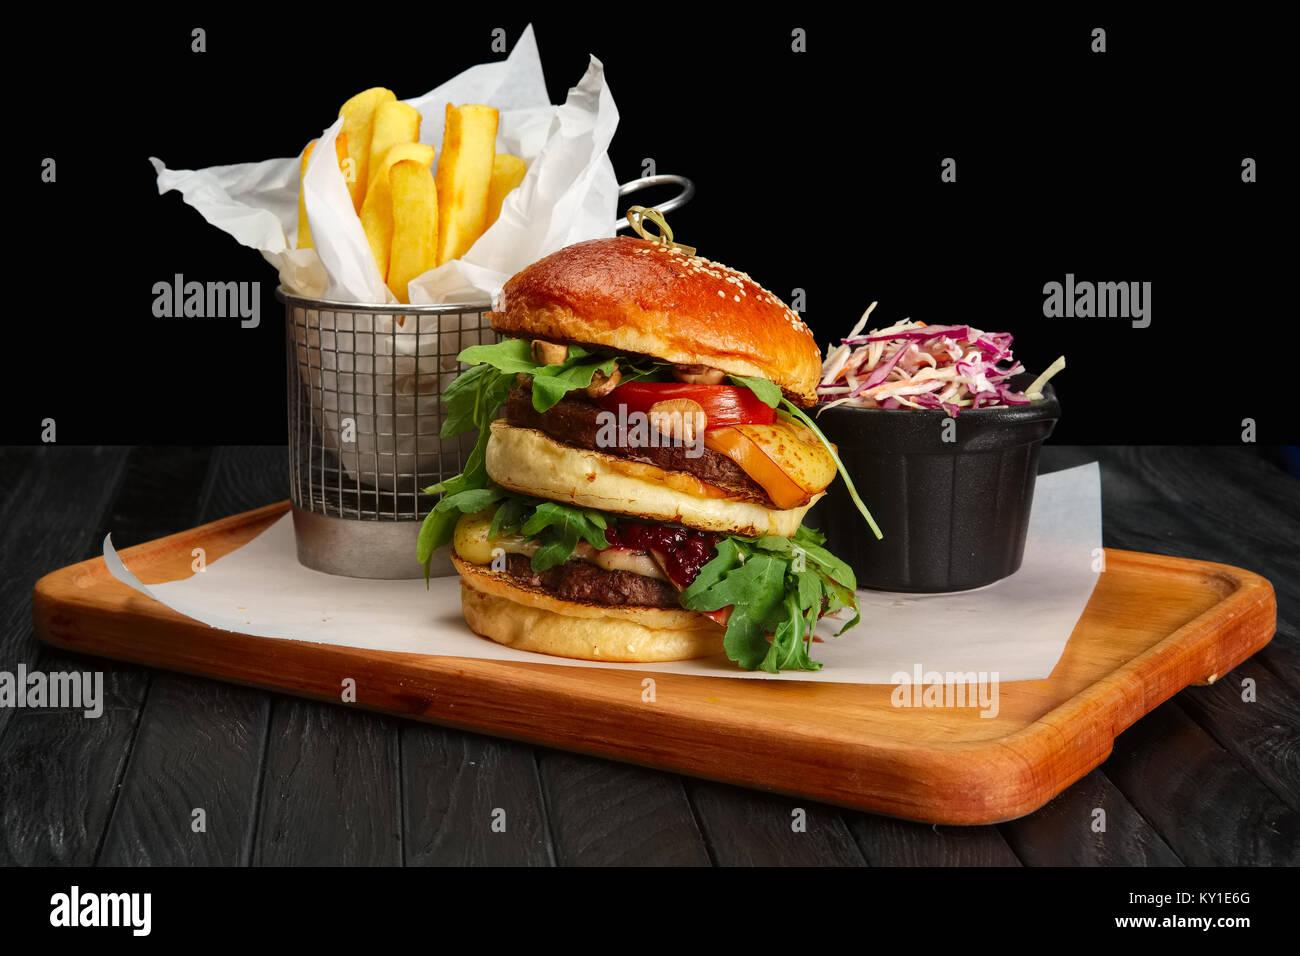 Big burger avec frites et salade de chou Banque D'Images